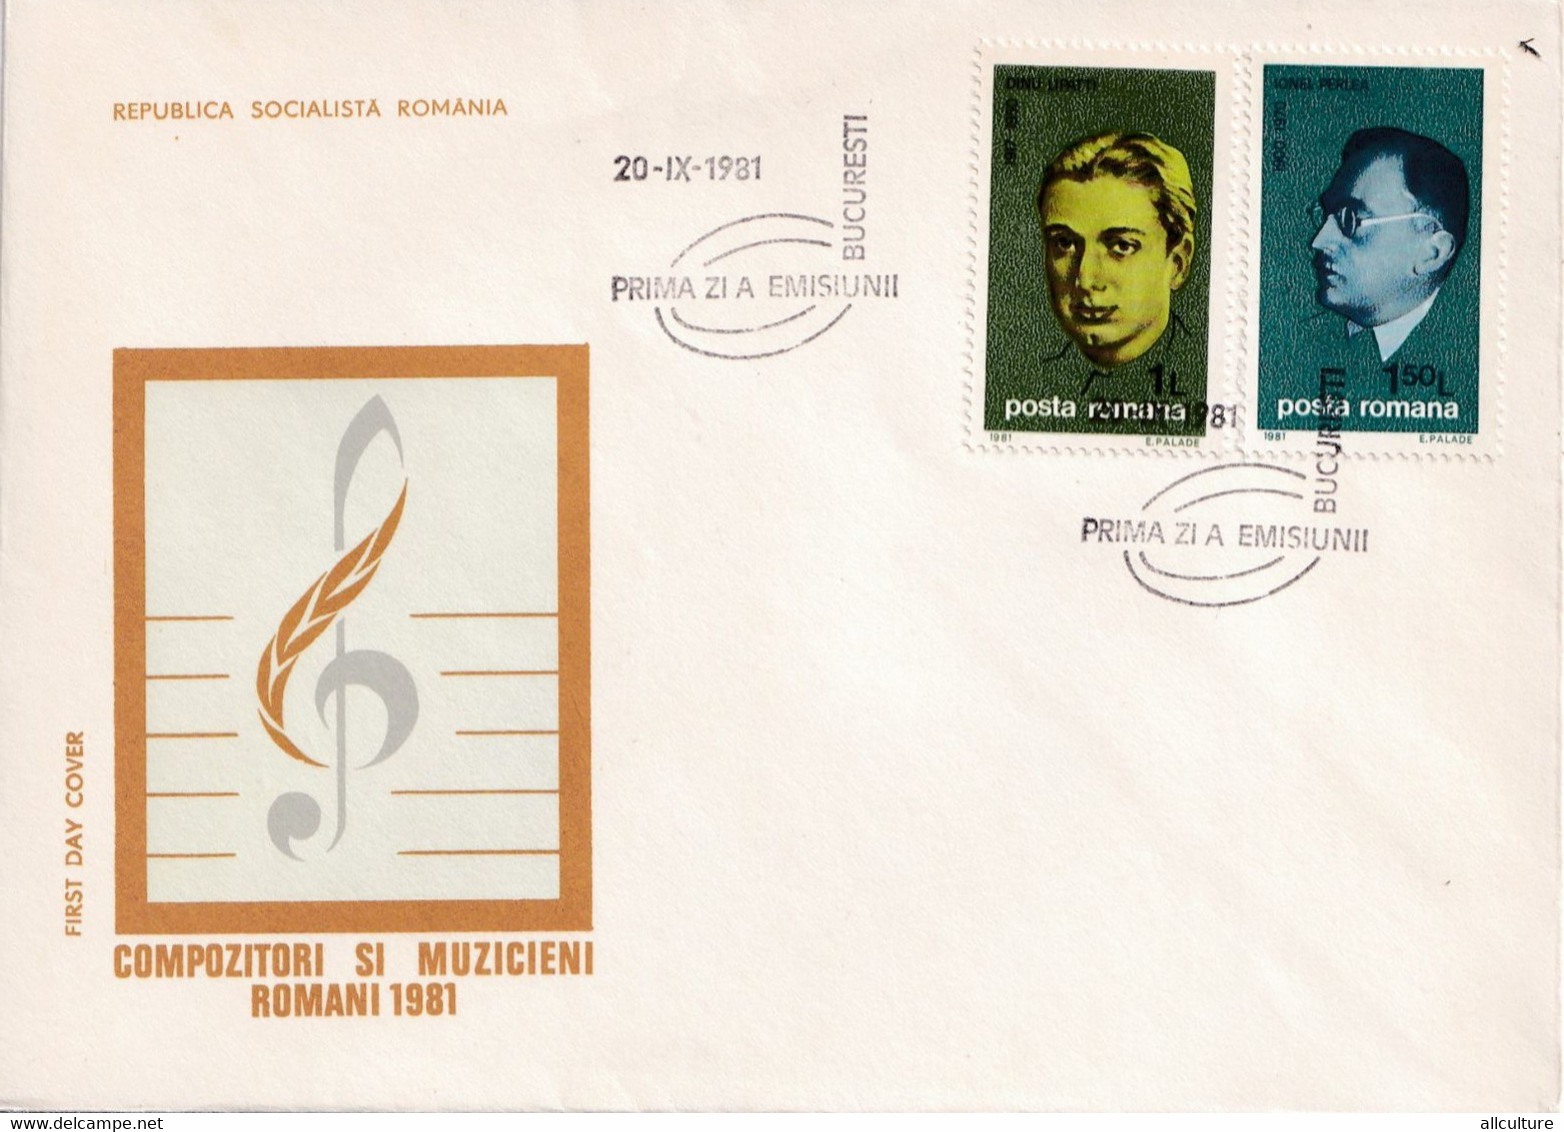 A2876 - Romanian Musicians And Composers, Bucuresti  1981, Socialist Republic Of Romania 3 Covers  FDC - Sänger